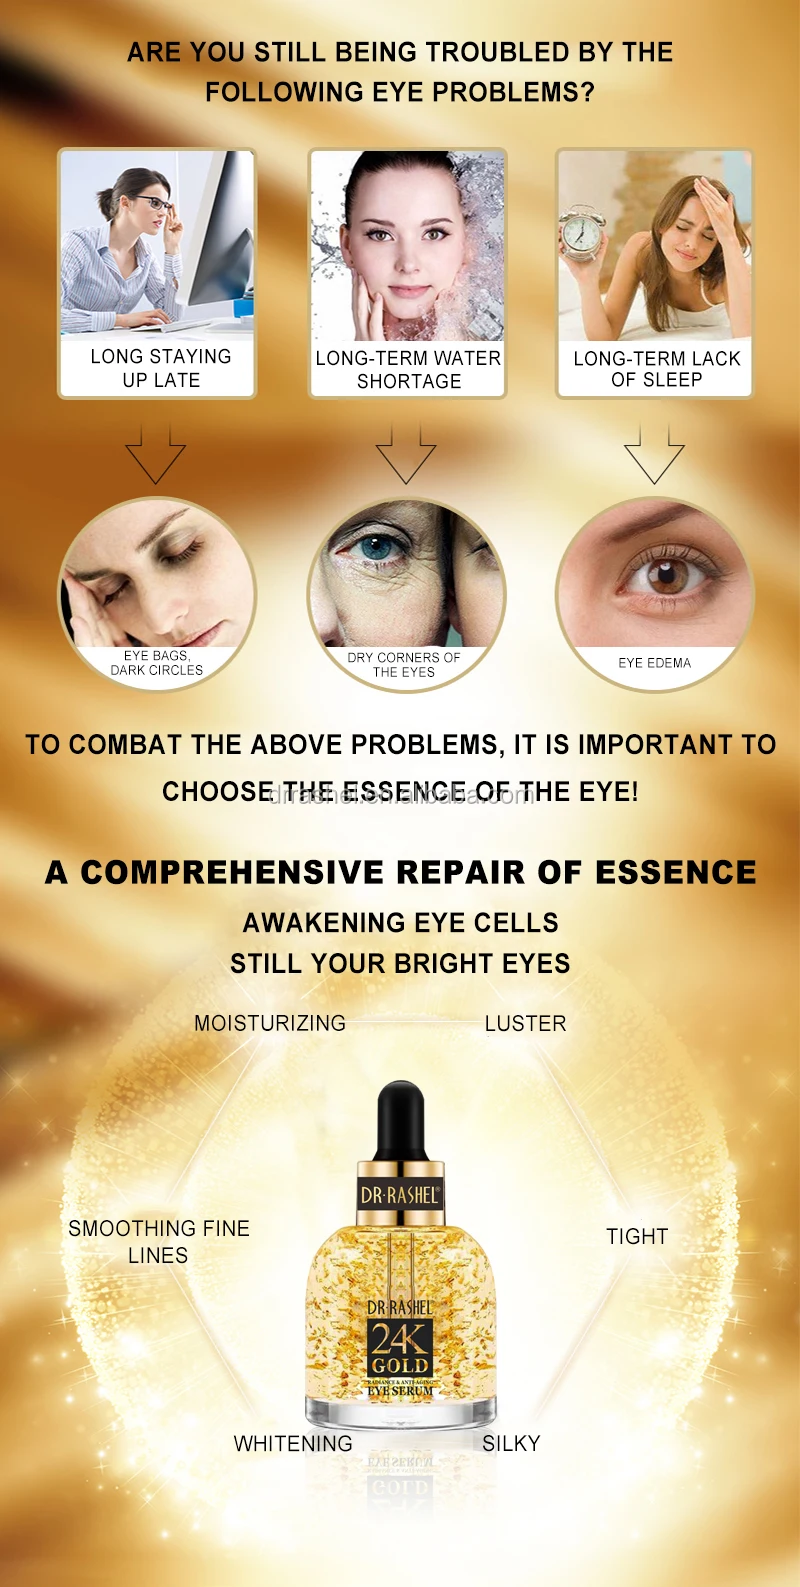 DR.RASHEL 24K GOLD RADINANCE & ANTI-AGING Primer Makeup Primer Eye Serum, View 24K GOLD eye serum, Product Details from Yiwu Rashel Trading Co., Ltd. on Alibaba.com